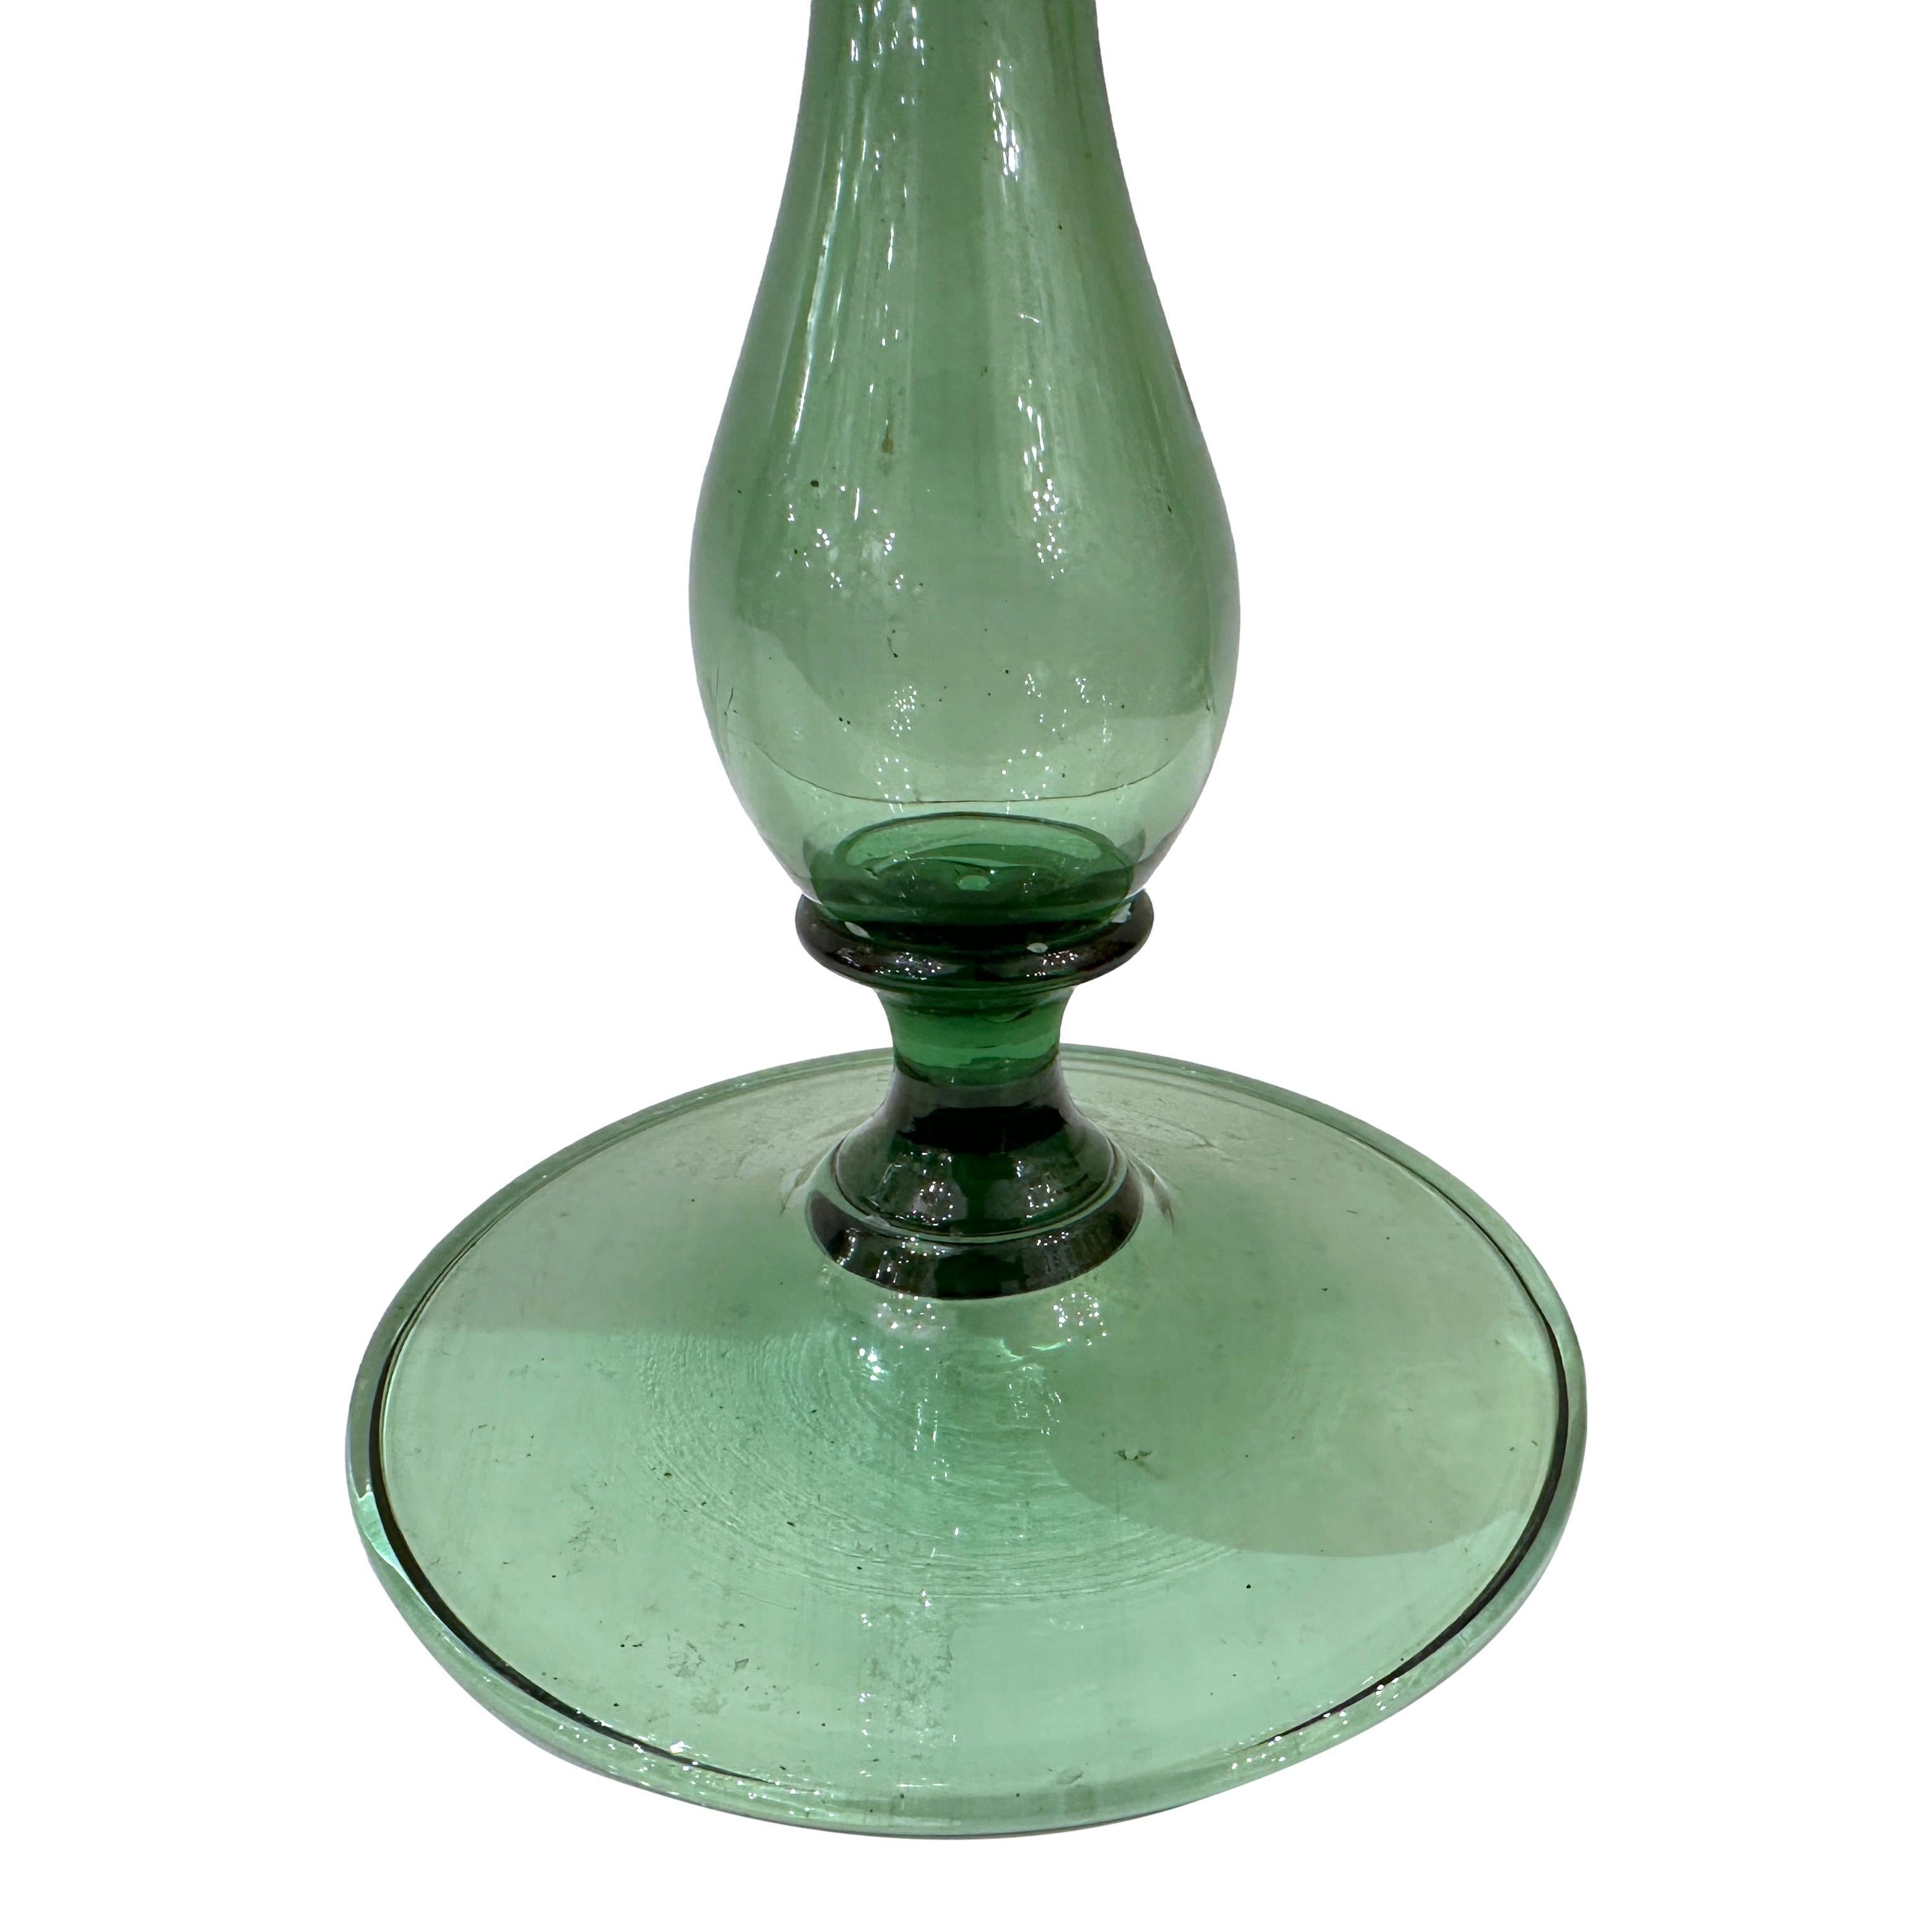 A circa 1950's Italian blown glass Murano candlestick.

Measurements:
Height: 14